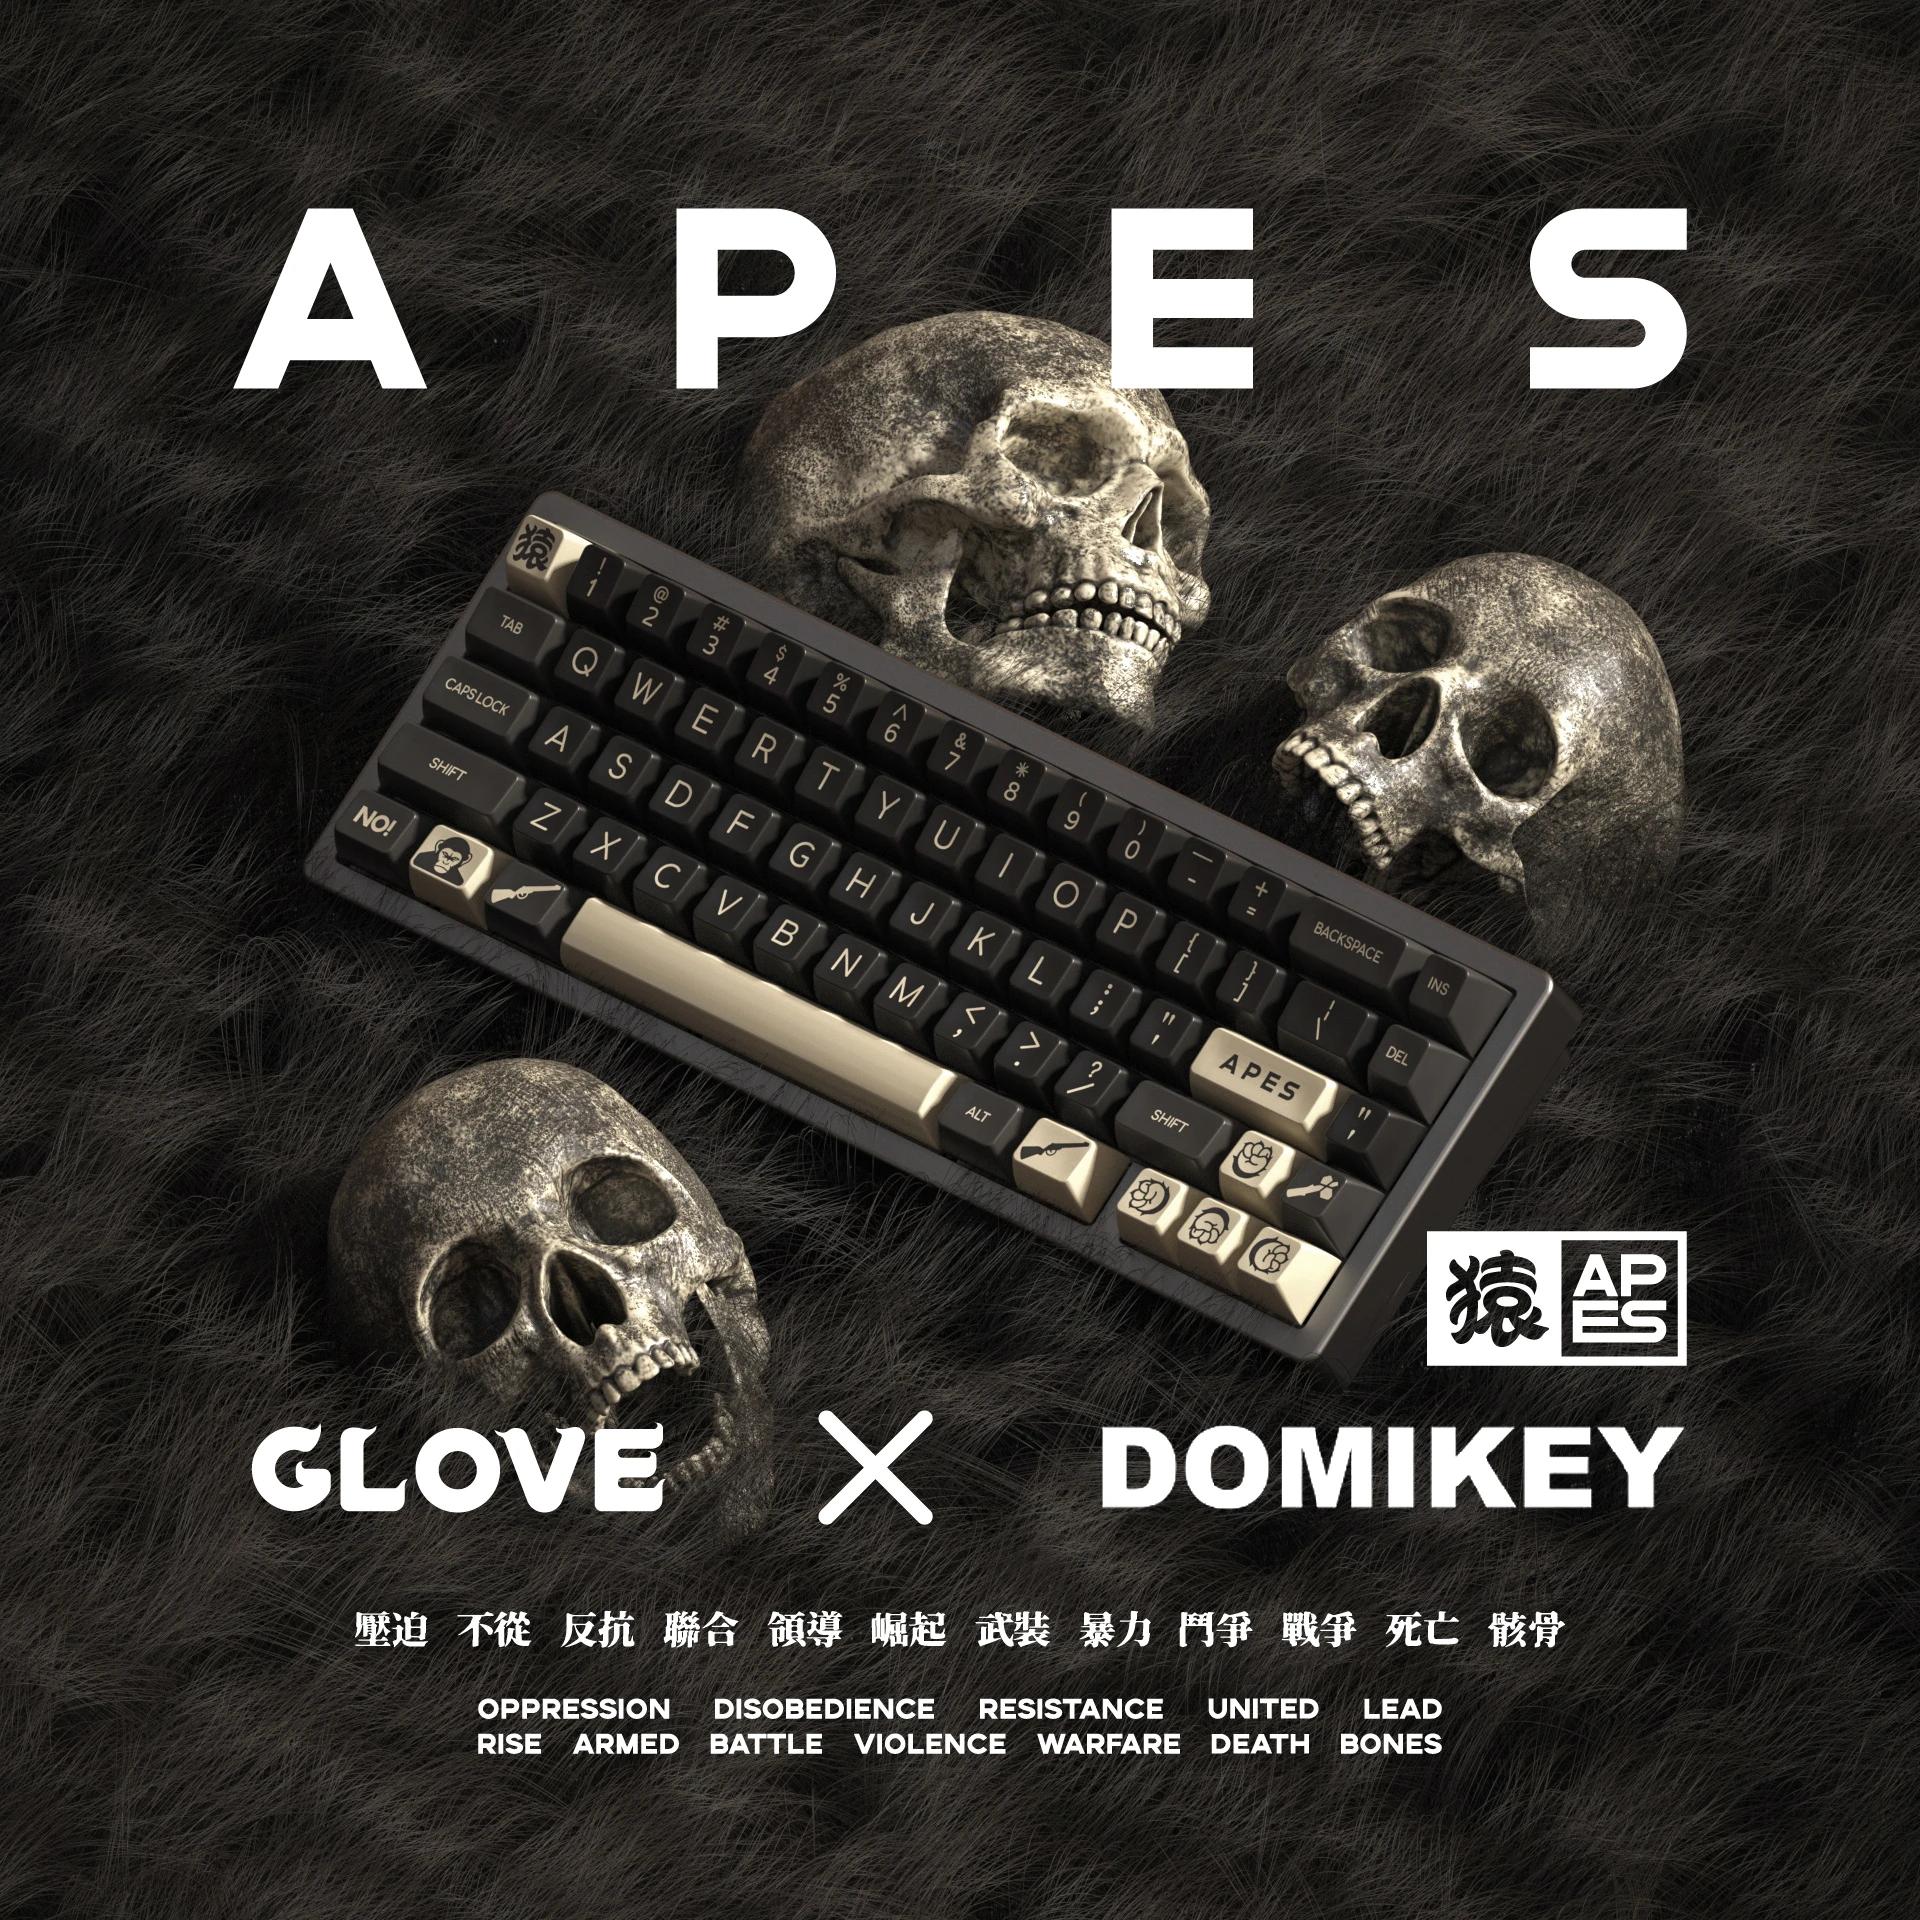 Domikey X Glove Studio SA Apes ABS Doubleshot Keycap Set